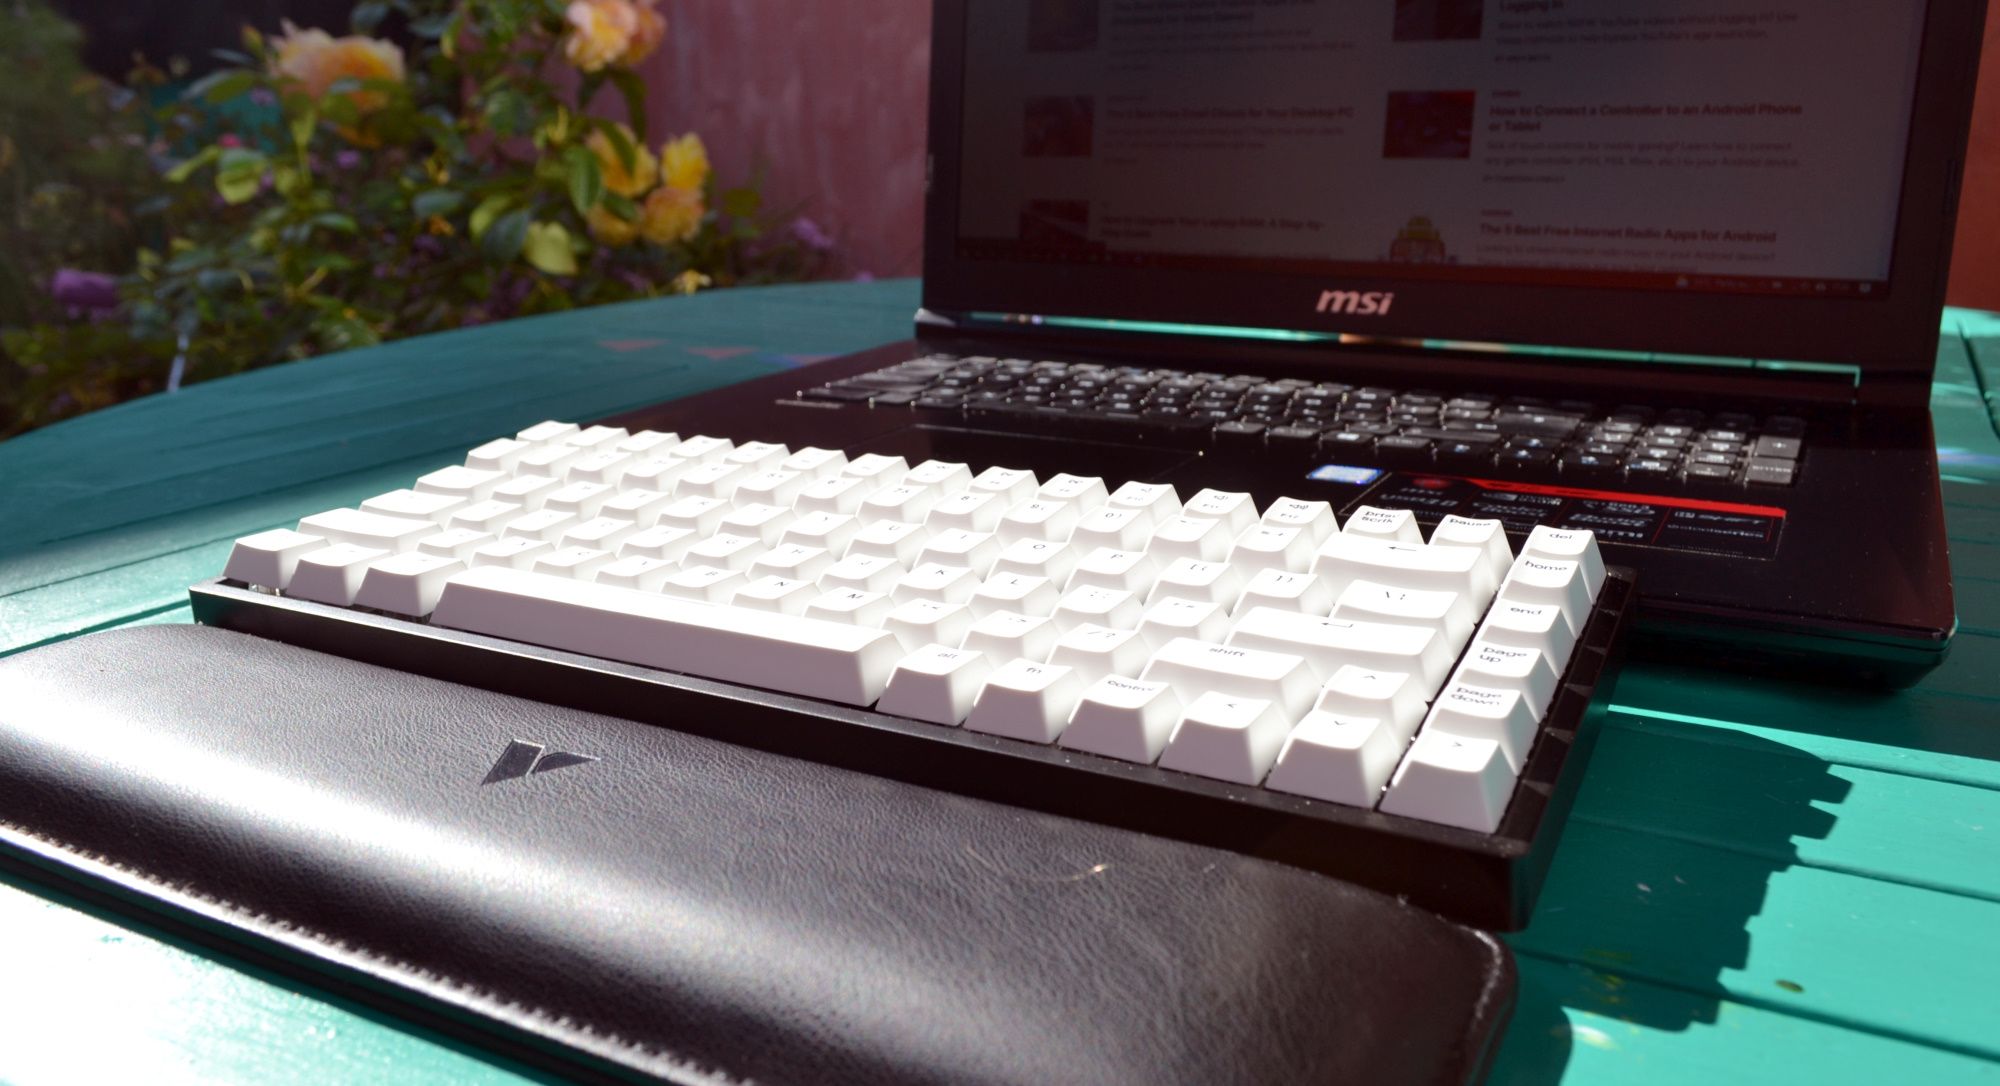 vissles v84 wireless mechanical keyboard laptop outside table